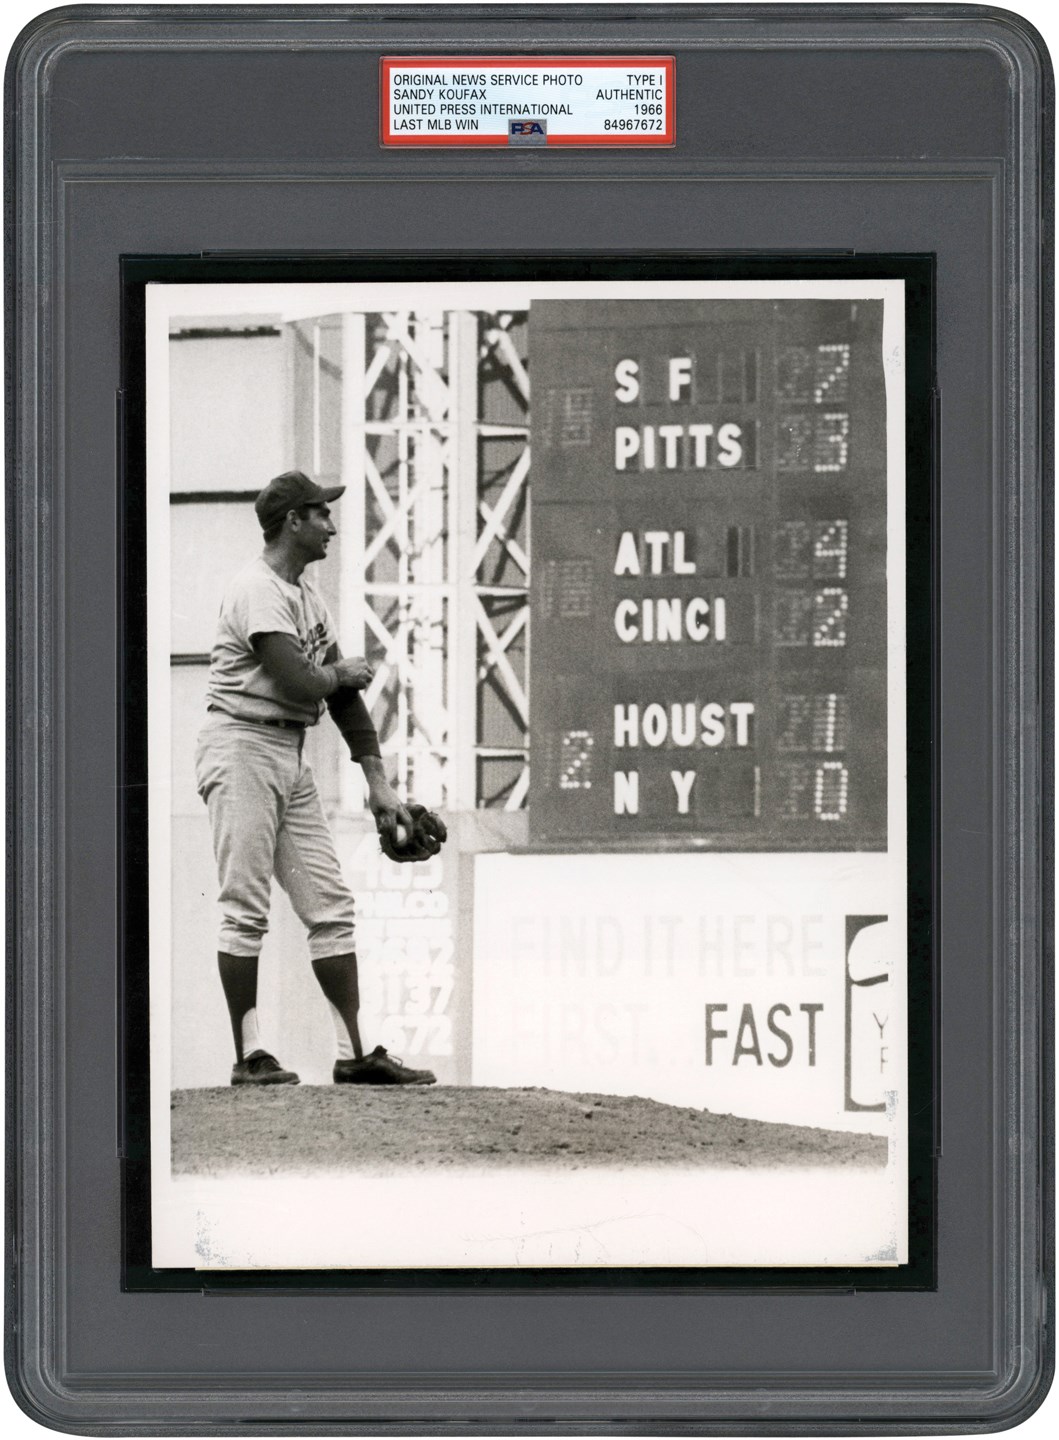 Vintage Sports Photographs - 1966 Sandy Koufax Last Career Win Photograph (PSA Type I)